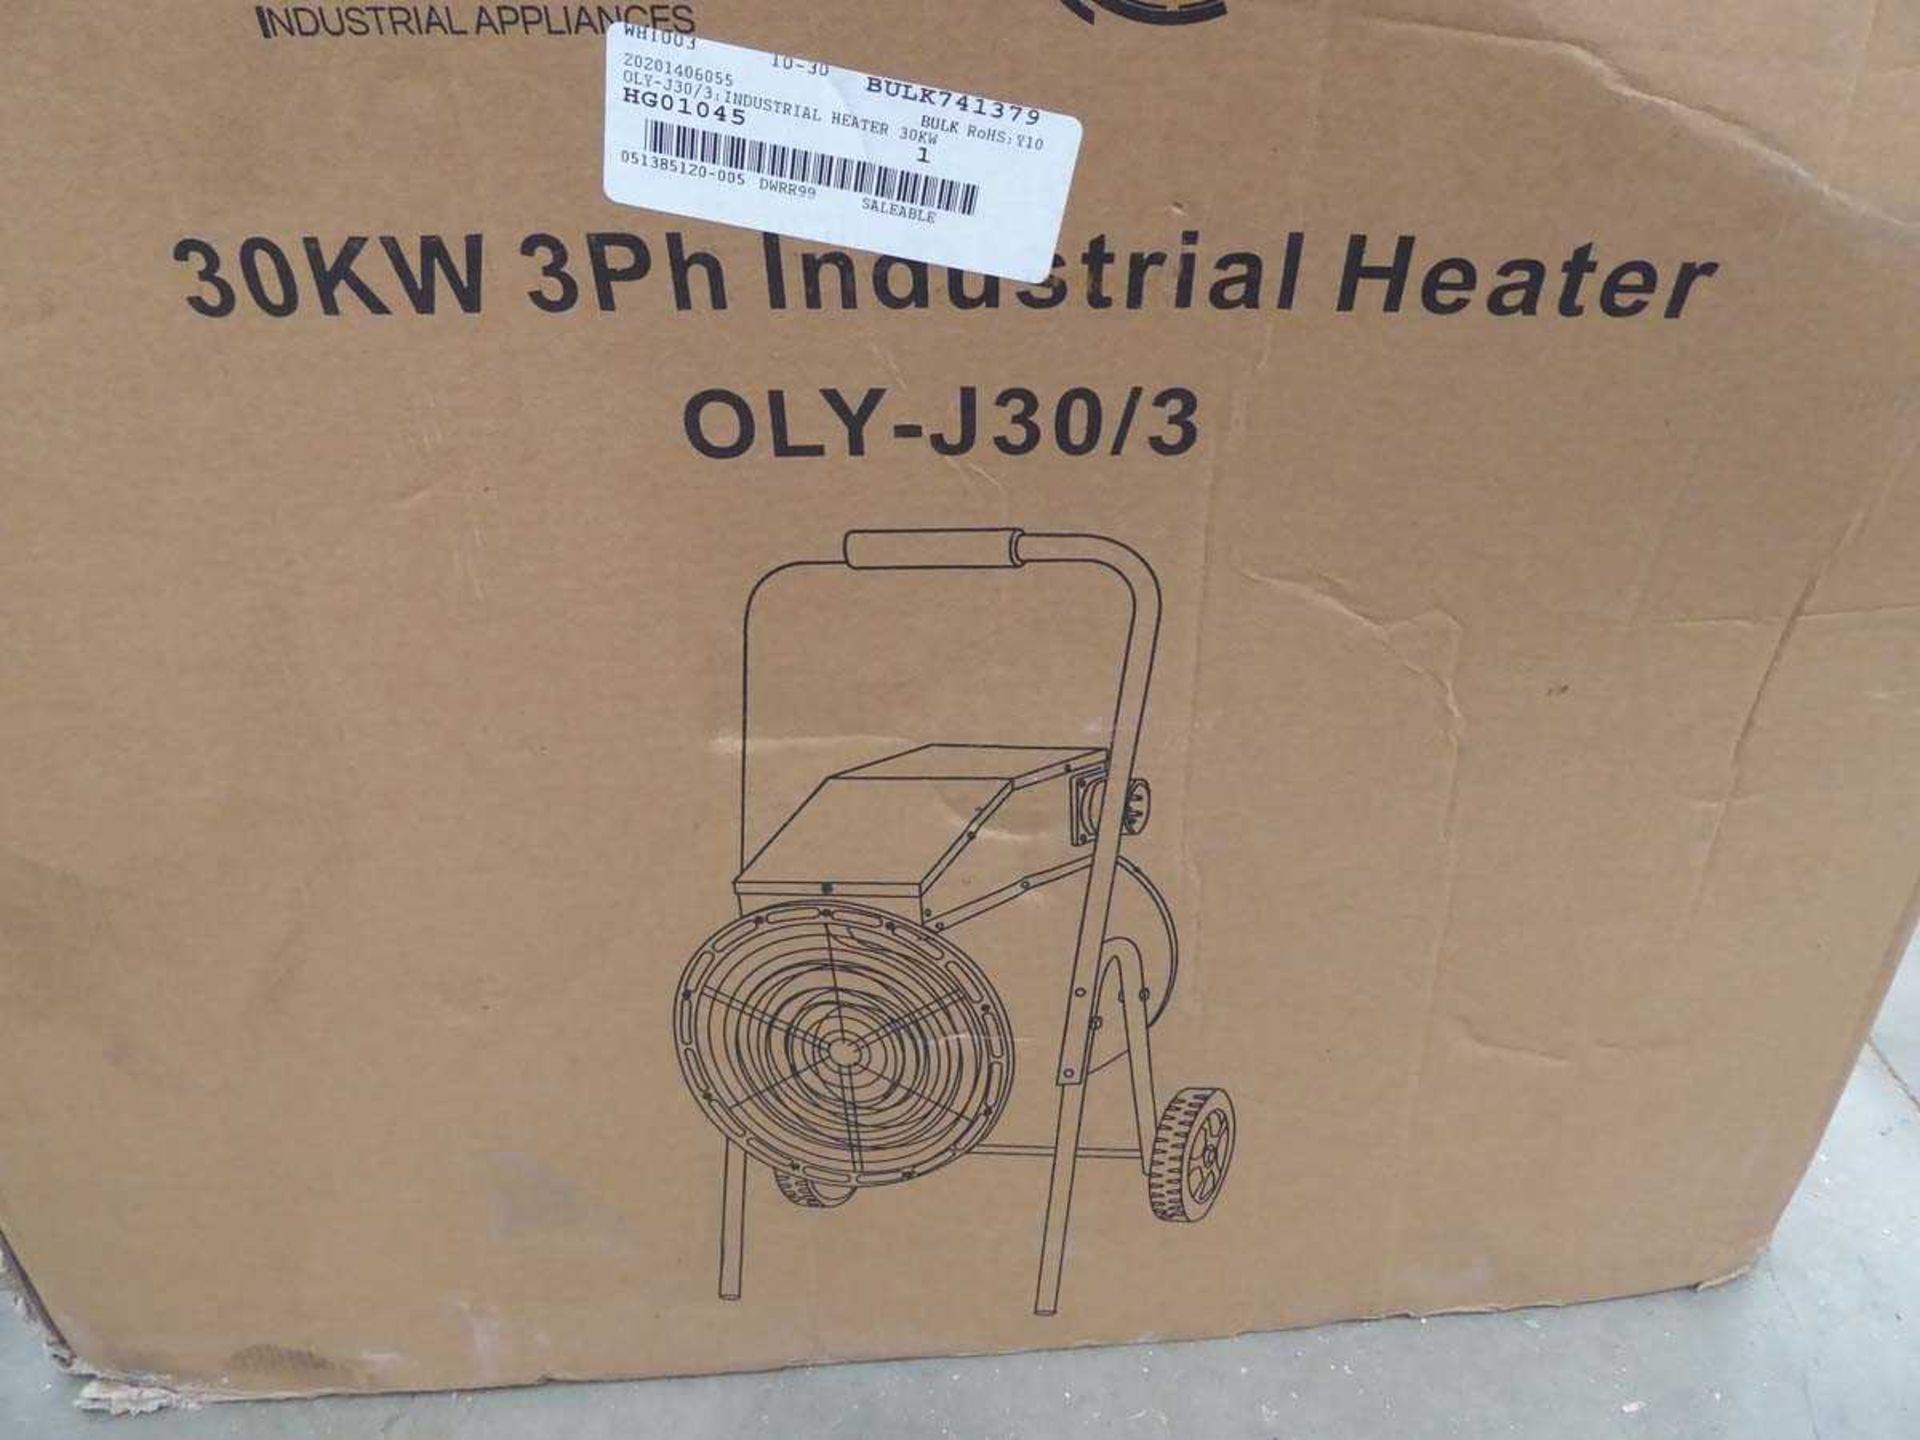 Boxed fan heater - Image 2 of 3